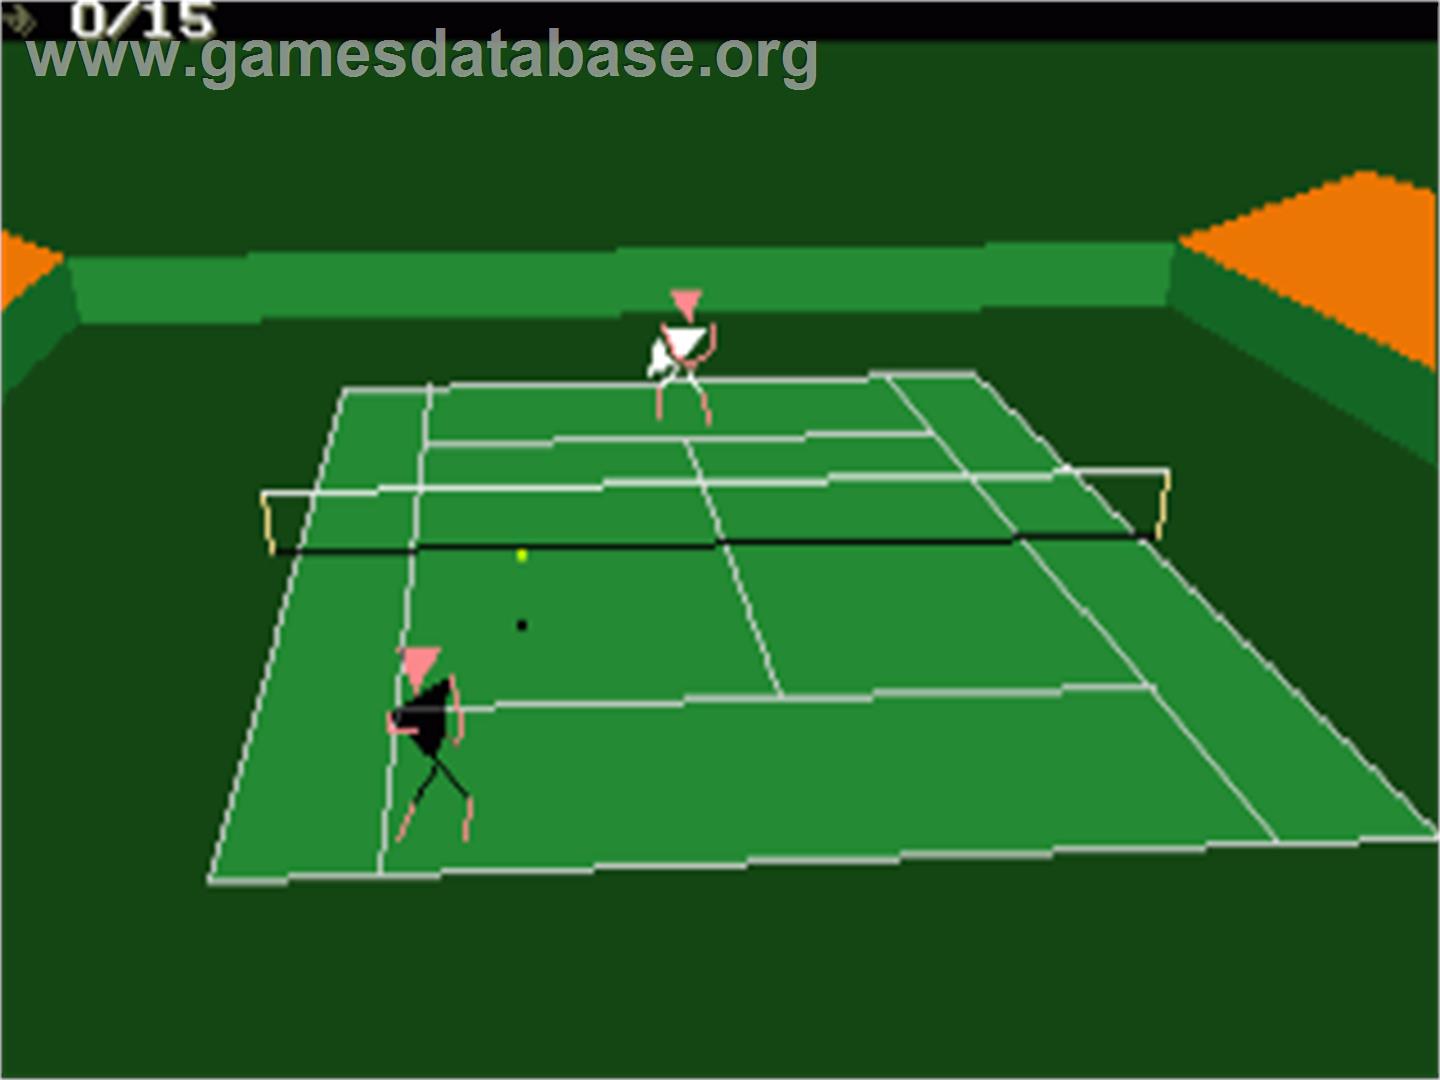 International 3D Tennis - Commodore Amiga - Artwork - In Game